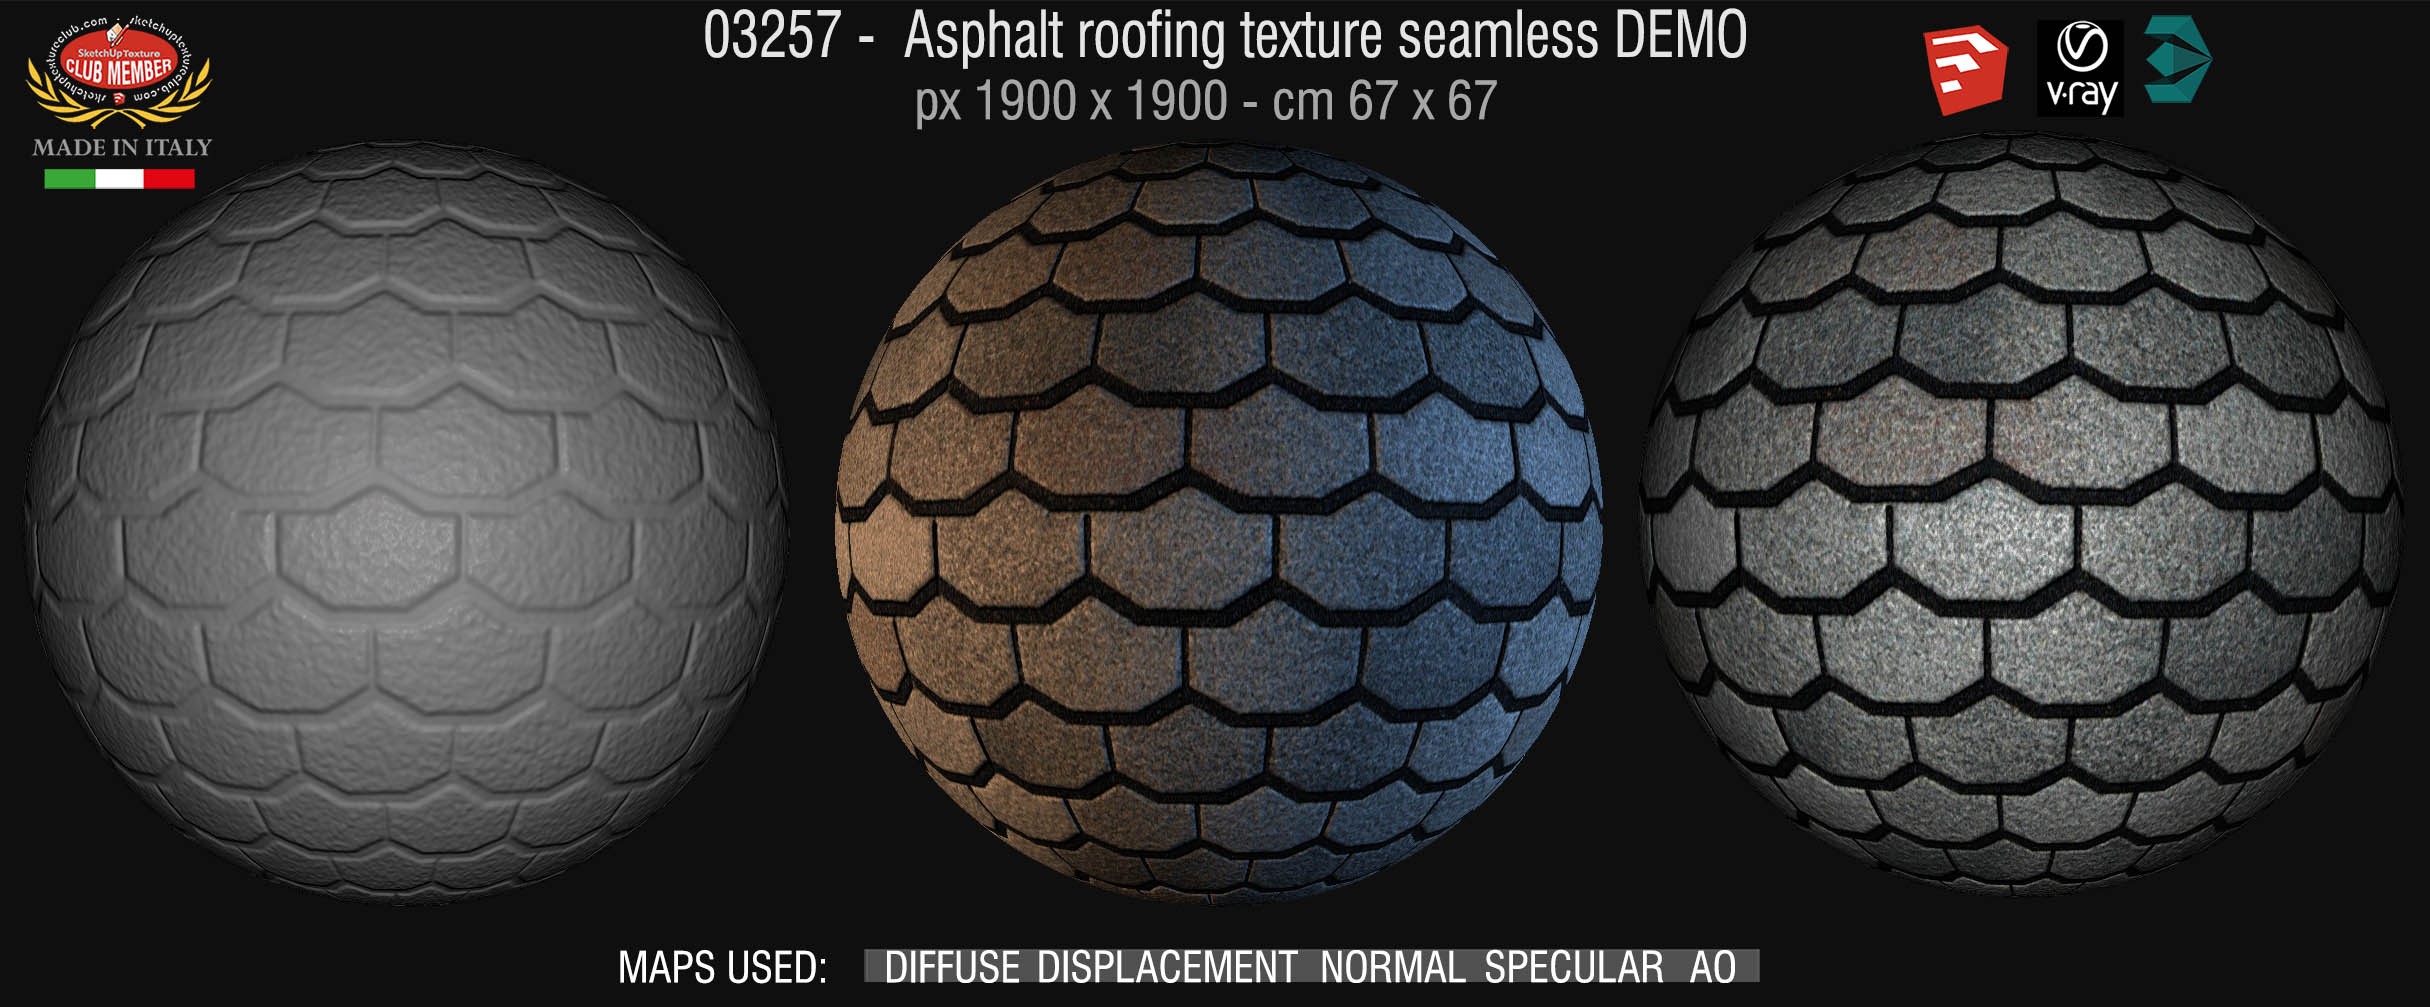 03257 Asphalt roofing texture seamless + maps DEMO